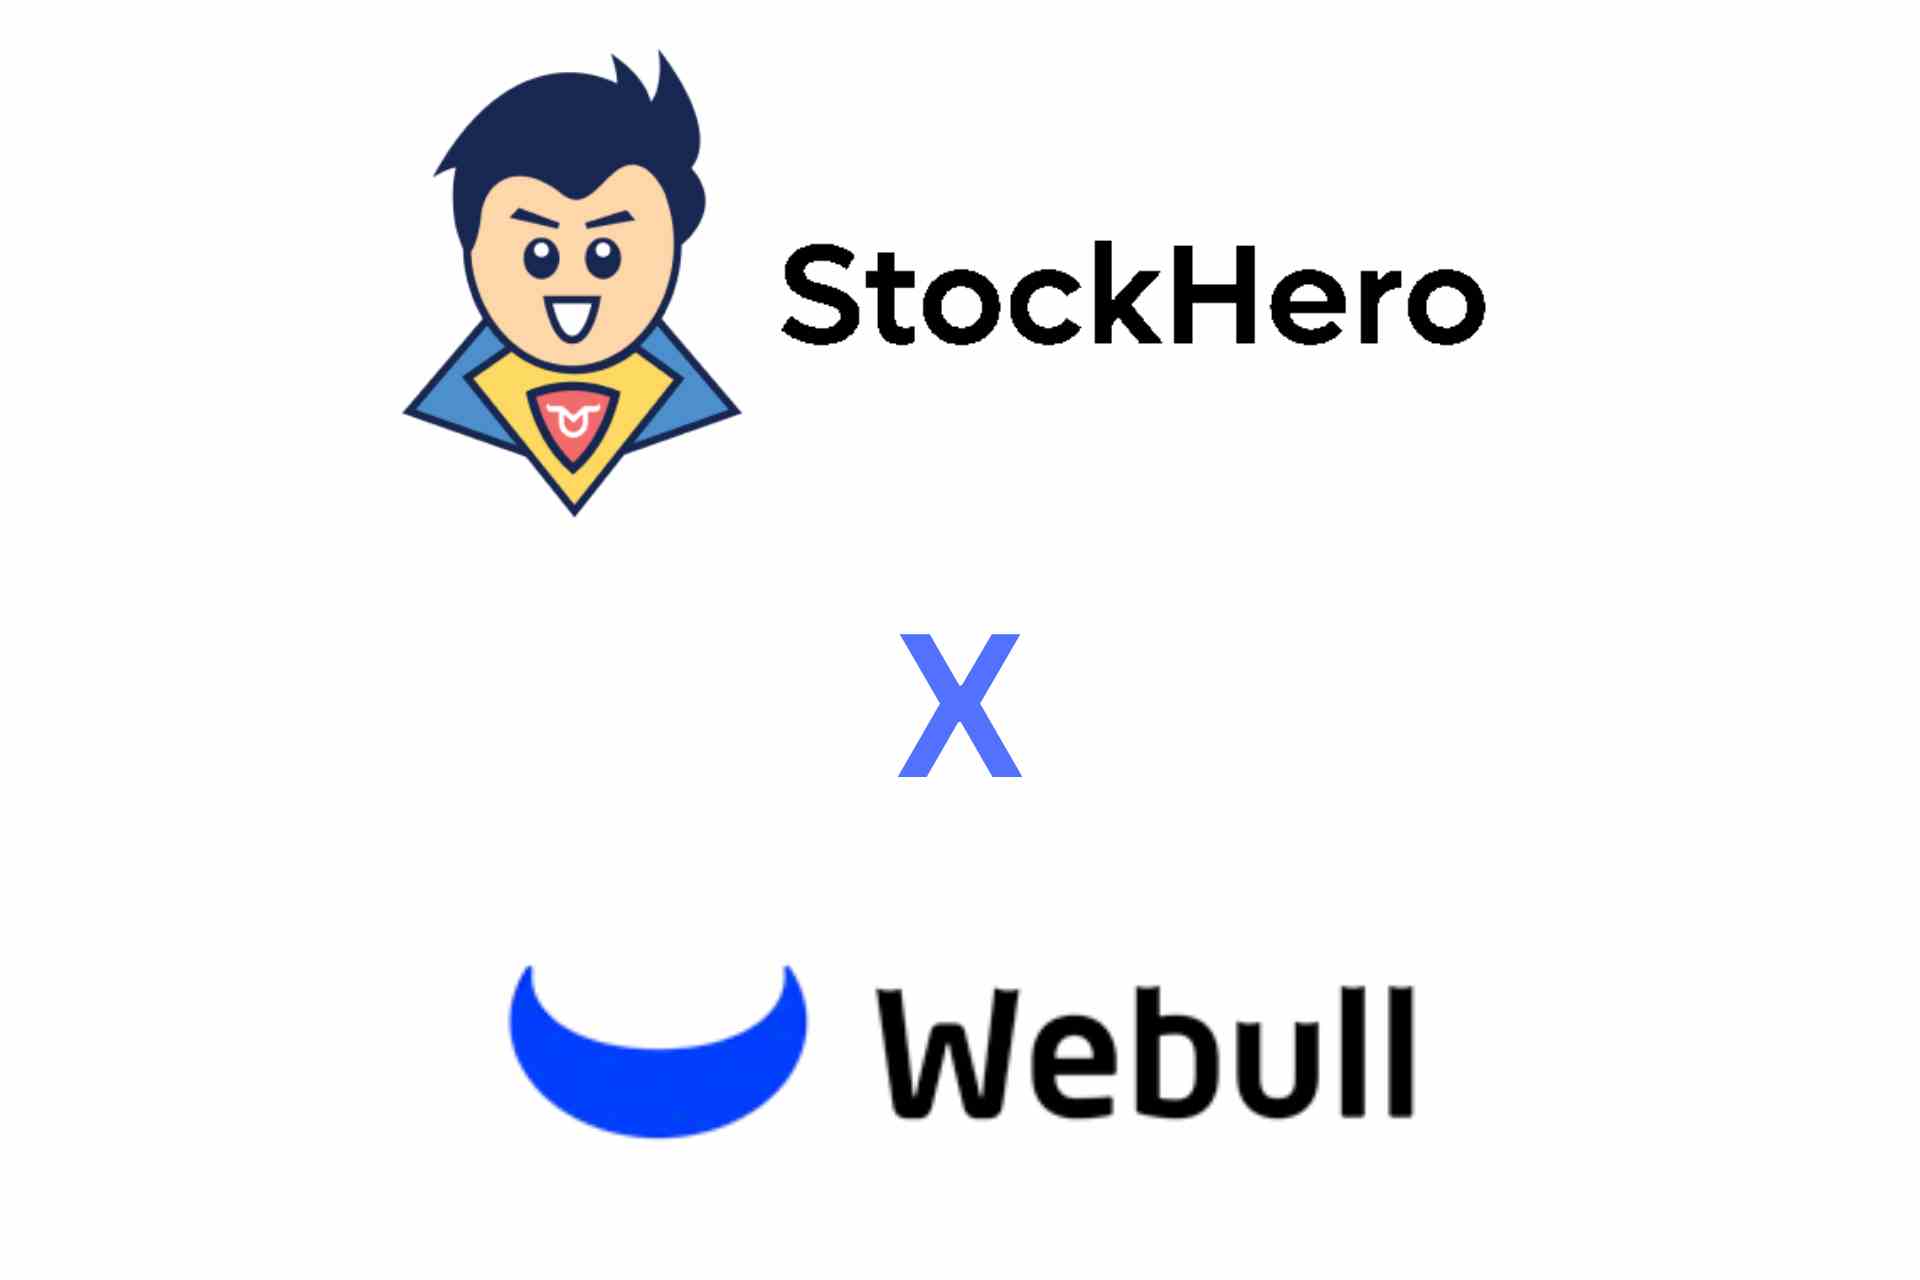 Run stock trading bots on Webull